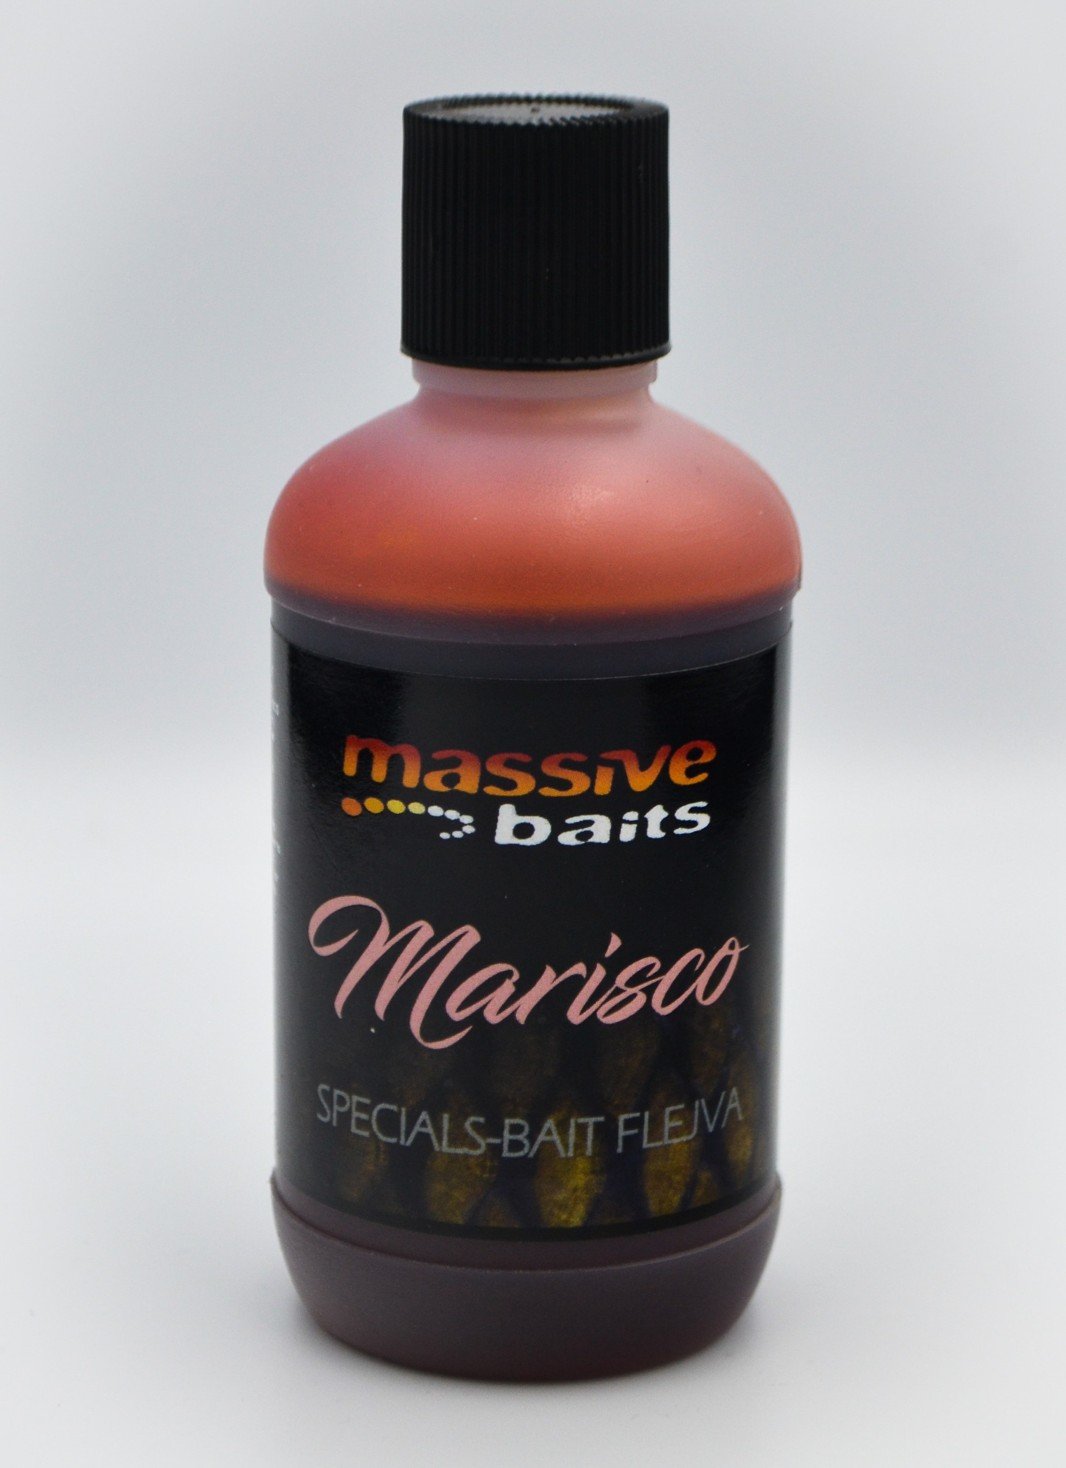 Massive Baits – Marisco – Bait Flejva – Flavour